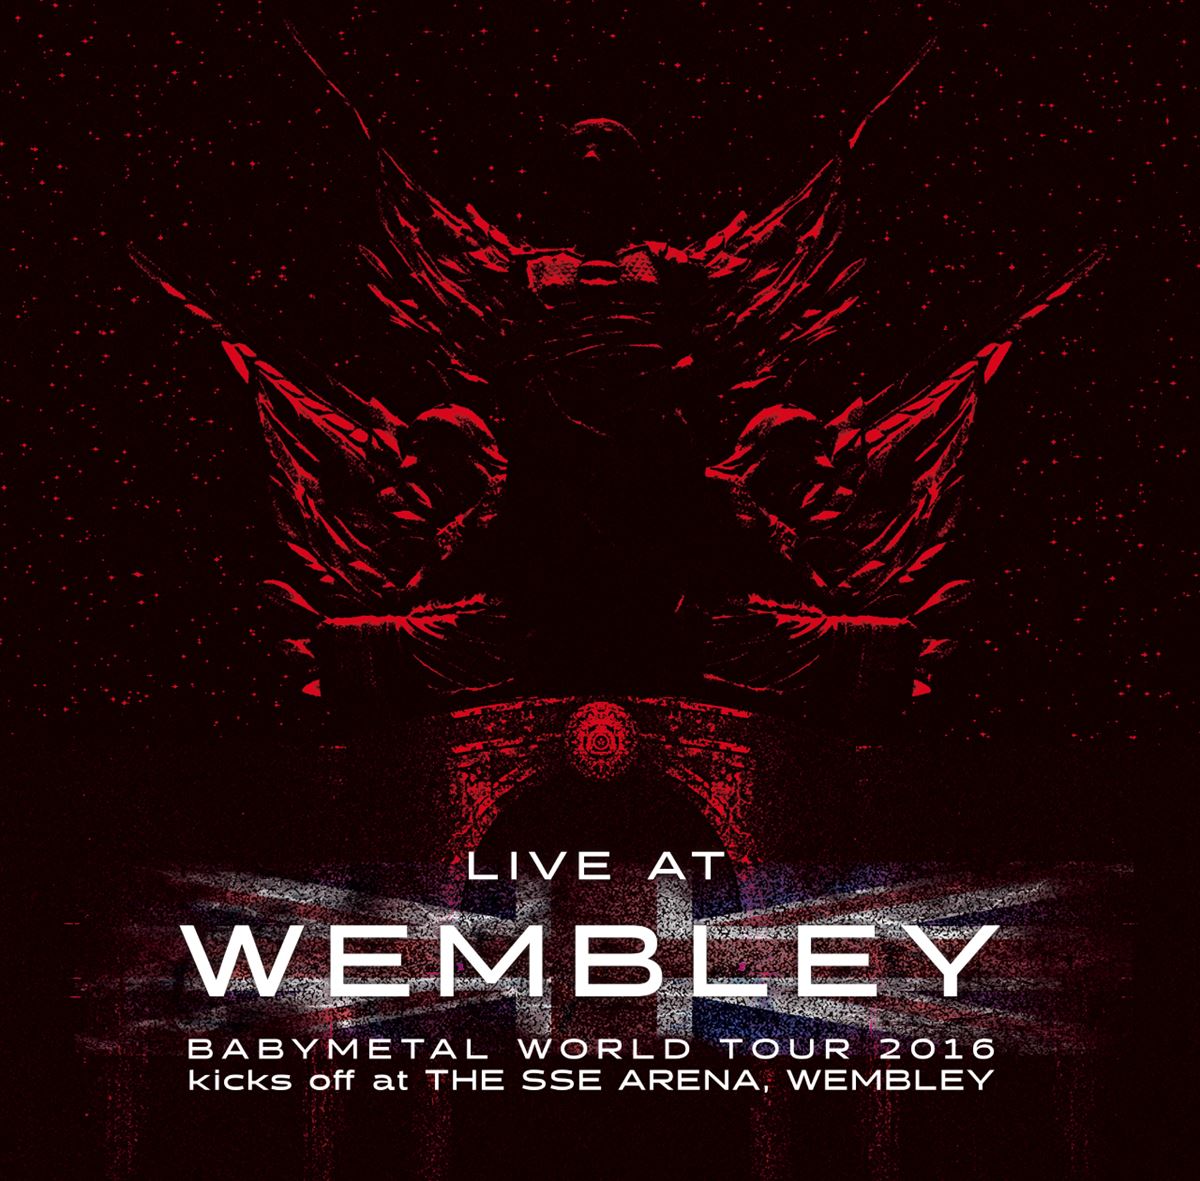 LIVE AT WEMBLEY BABYMETAL WORLD TOUR 2016 kicks off at THE SSE ARENA, WEMBLEY